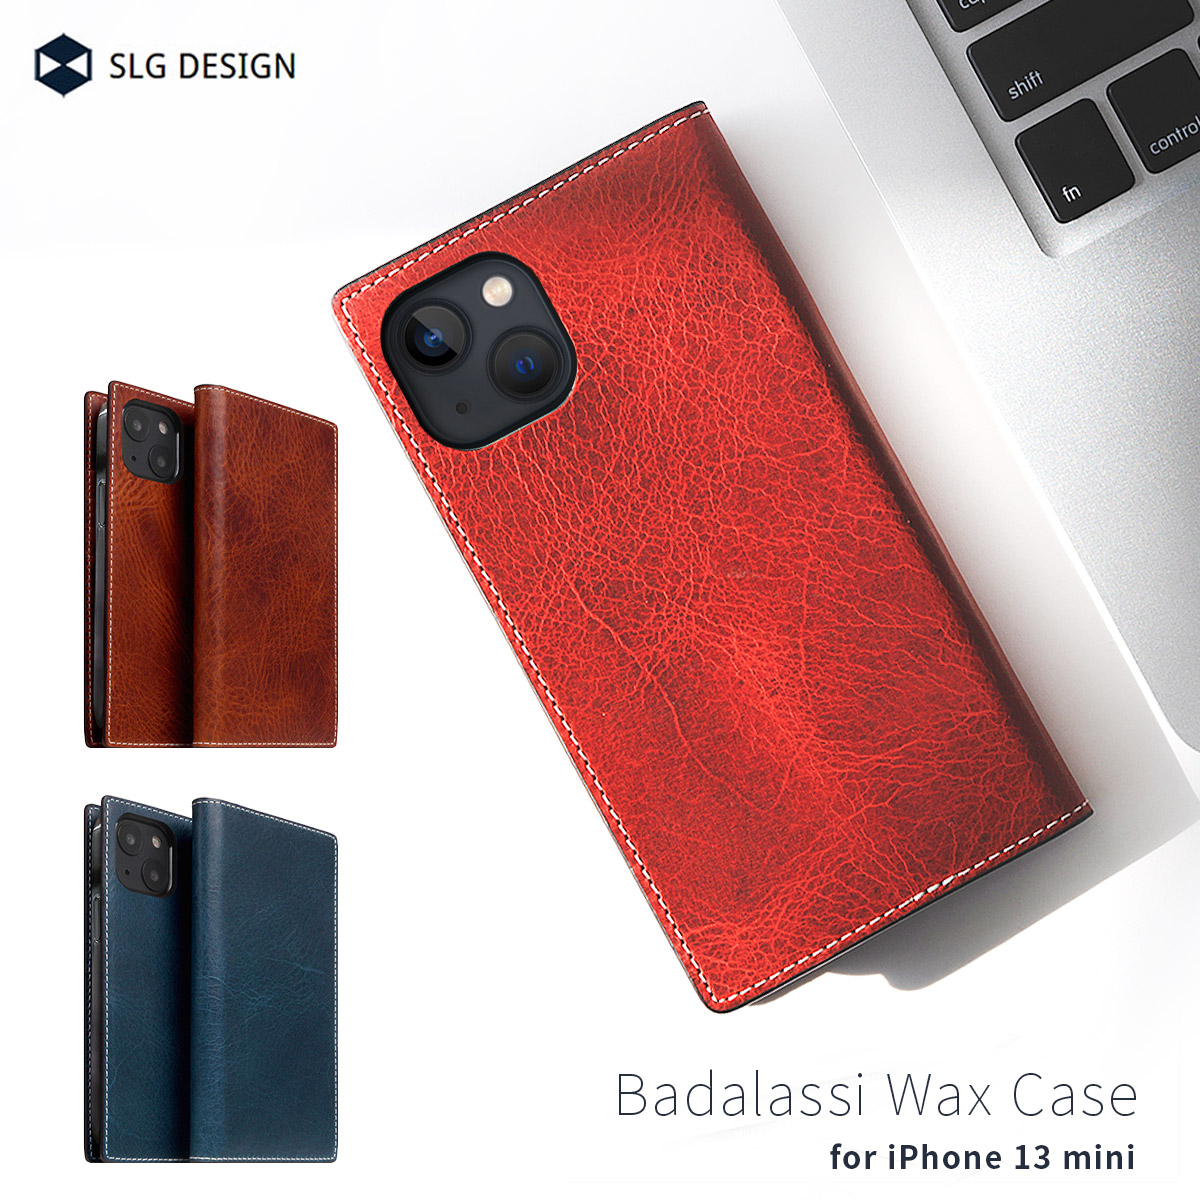 【iPhone 13 mini】Badalassi Wax Case